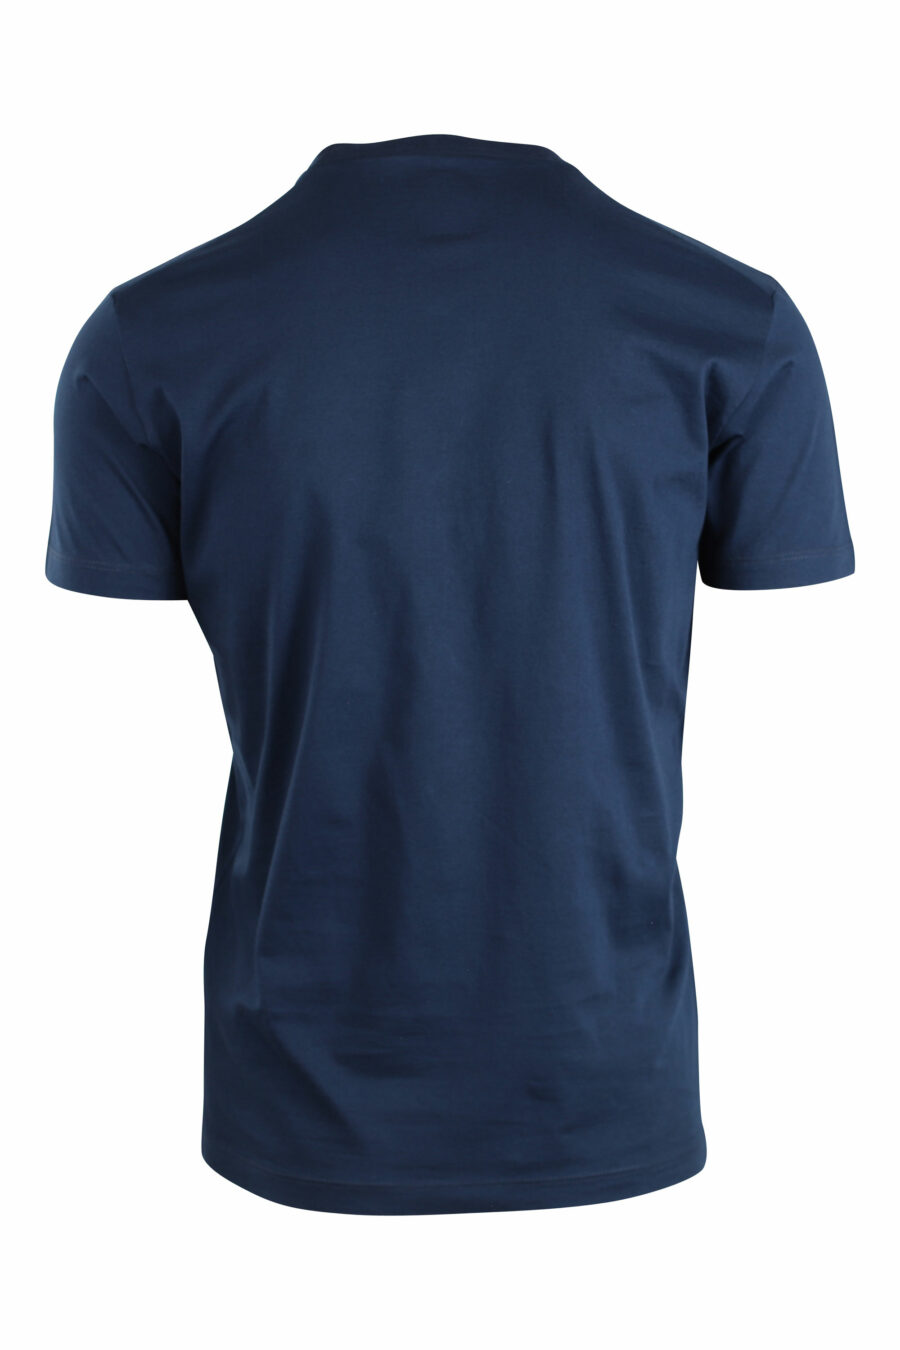 Dunkelblaues T-Shirt mit Maxilogo und Blatt - IMG 2643